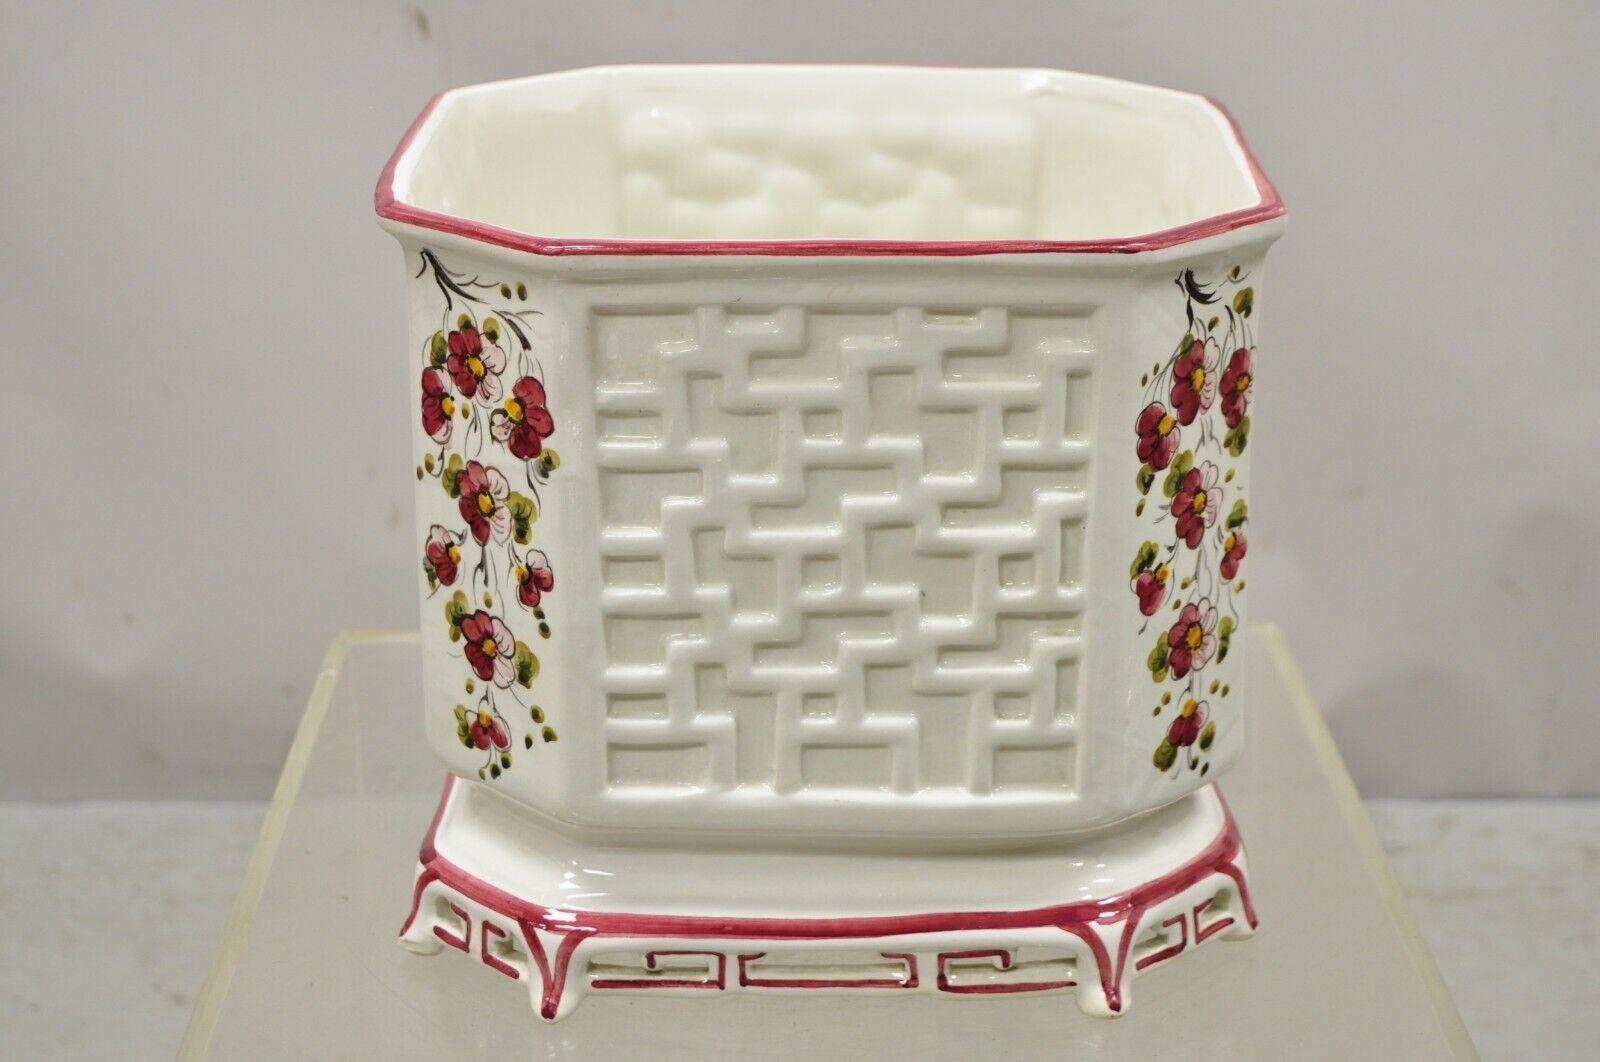 Vintage Italian Ceramic Octagonal Lattice Fretwork Pink Flower Garden Planter Pot. Item features lattice fretwork design, pink flower decoration, pierced fretwork base, stamped 